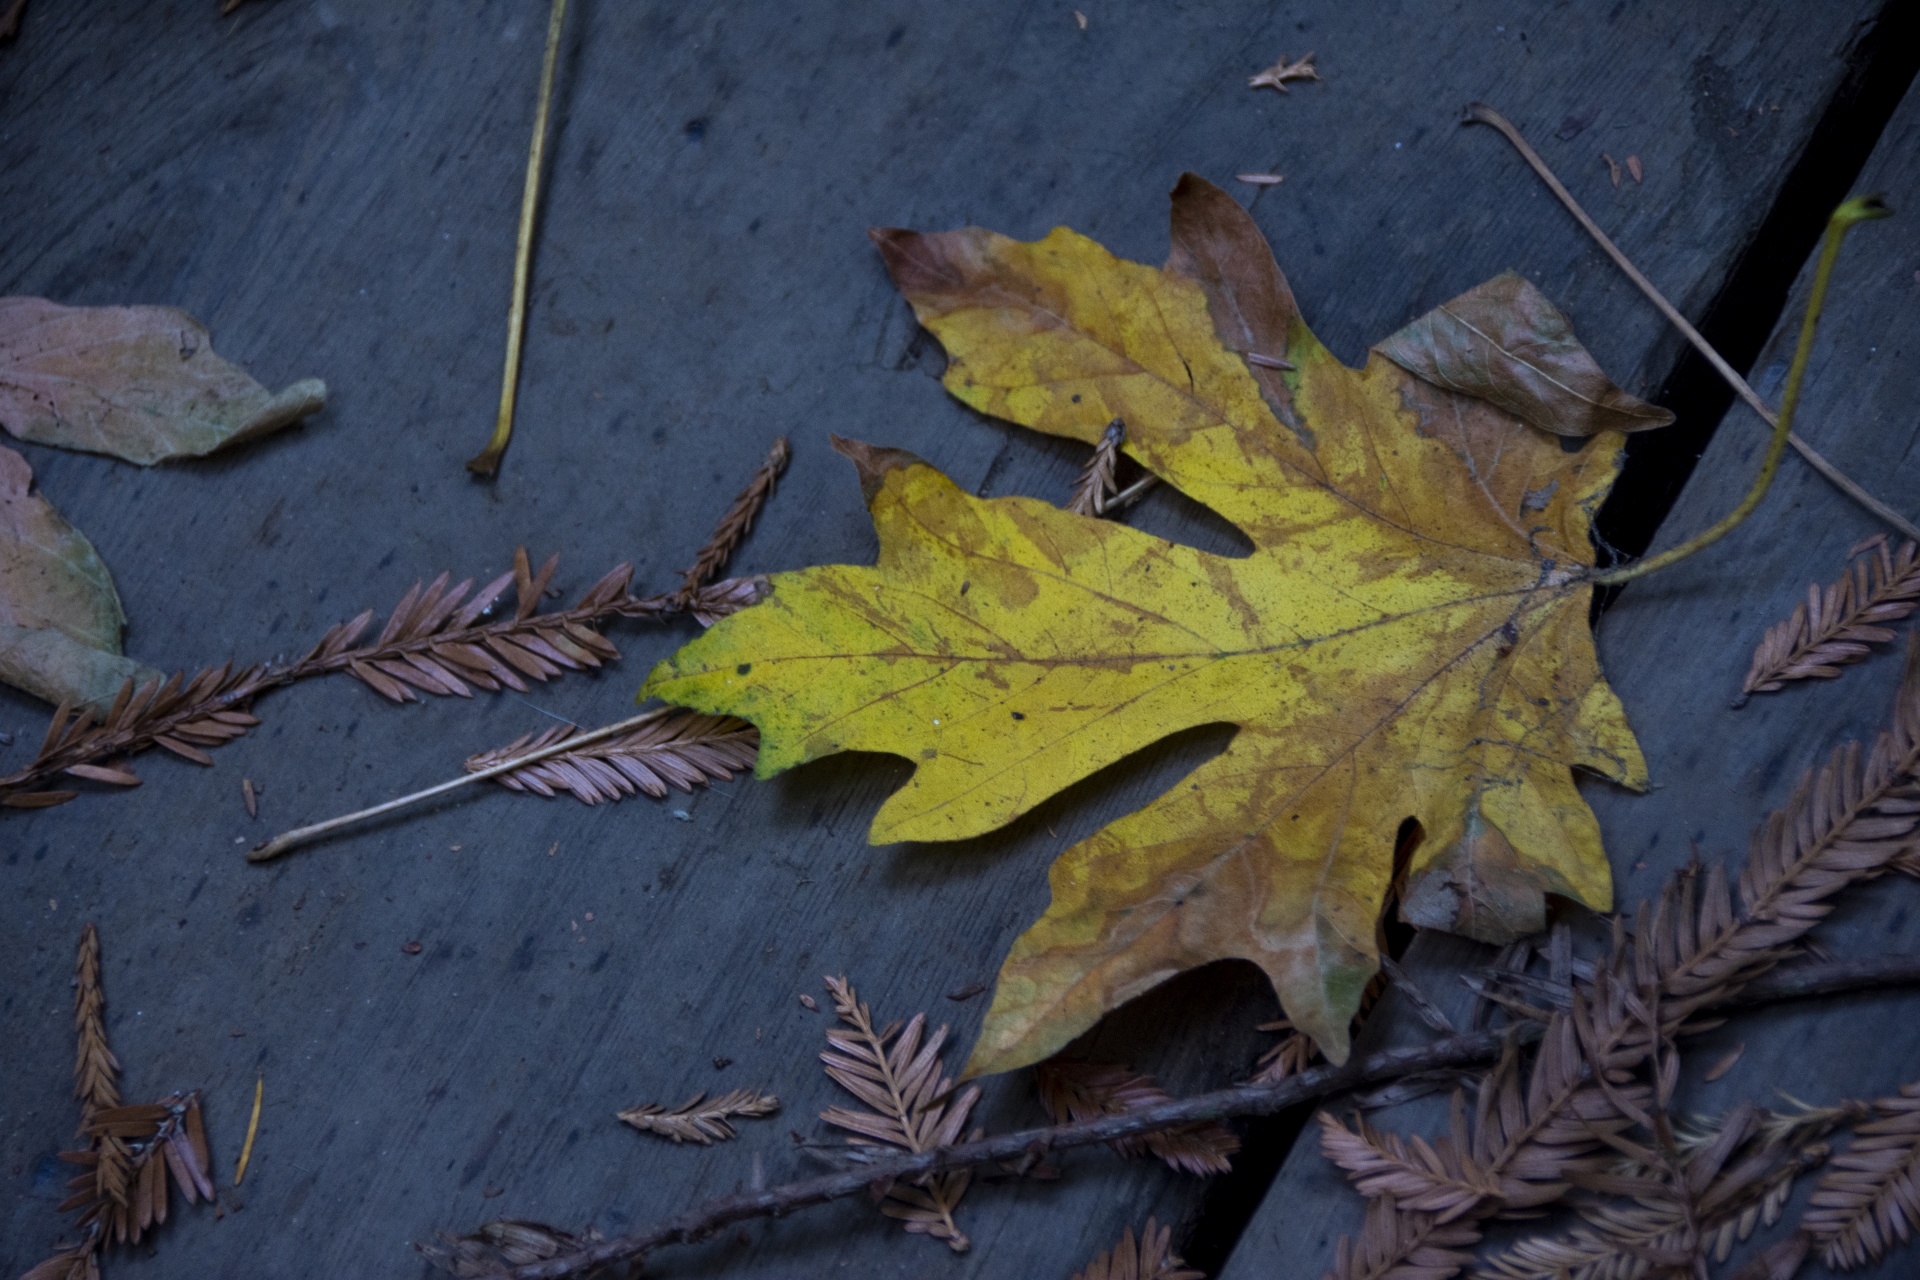 autumn-leaf-free-stock-photo-public-domain-pictures